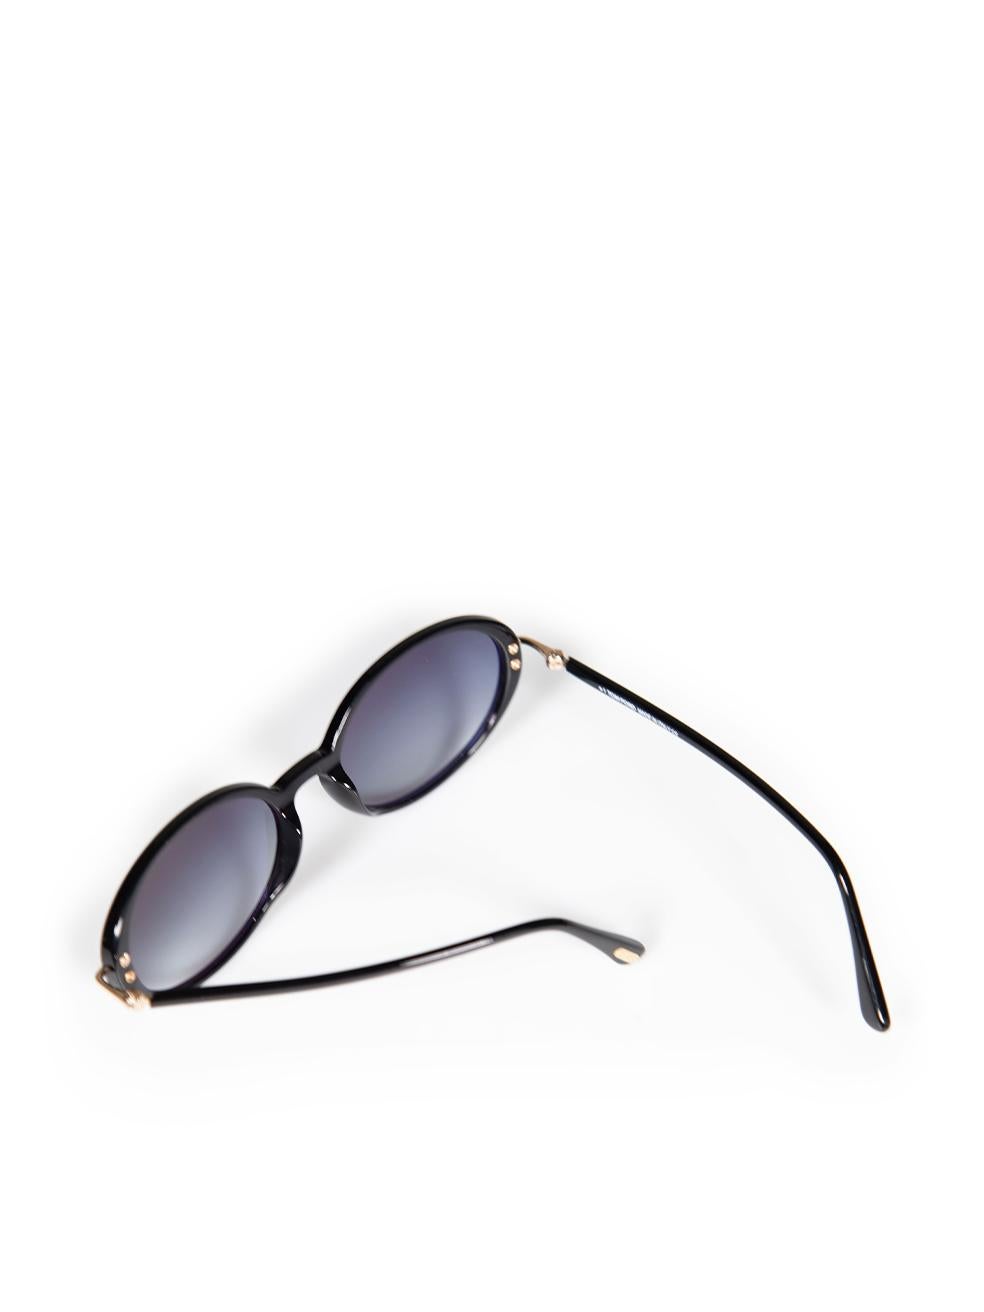 Tom Ford Shiny Black Raquel Oval Sunglasses 3